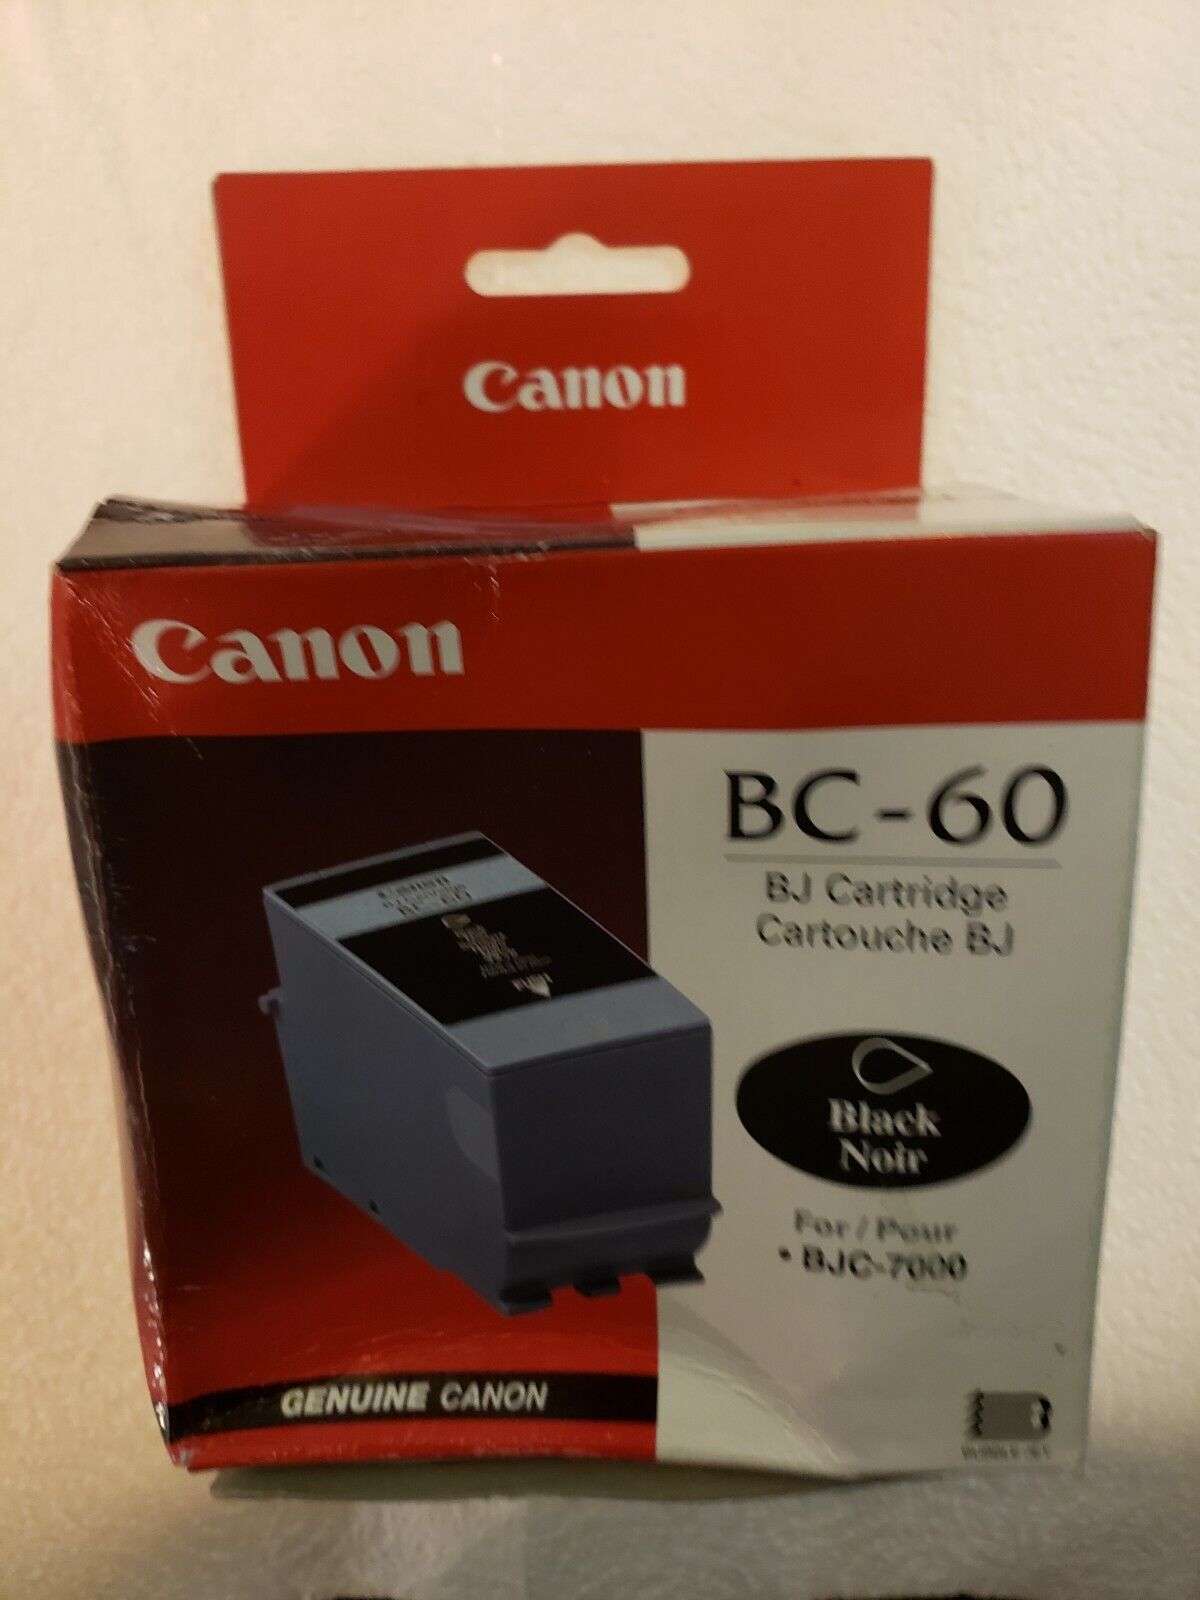 Canon BC-60 Black Ink Cartridge for BJC-7000 series & BJC-8000 NEW